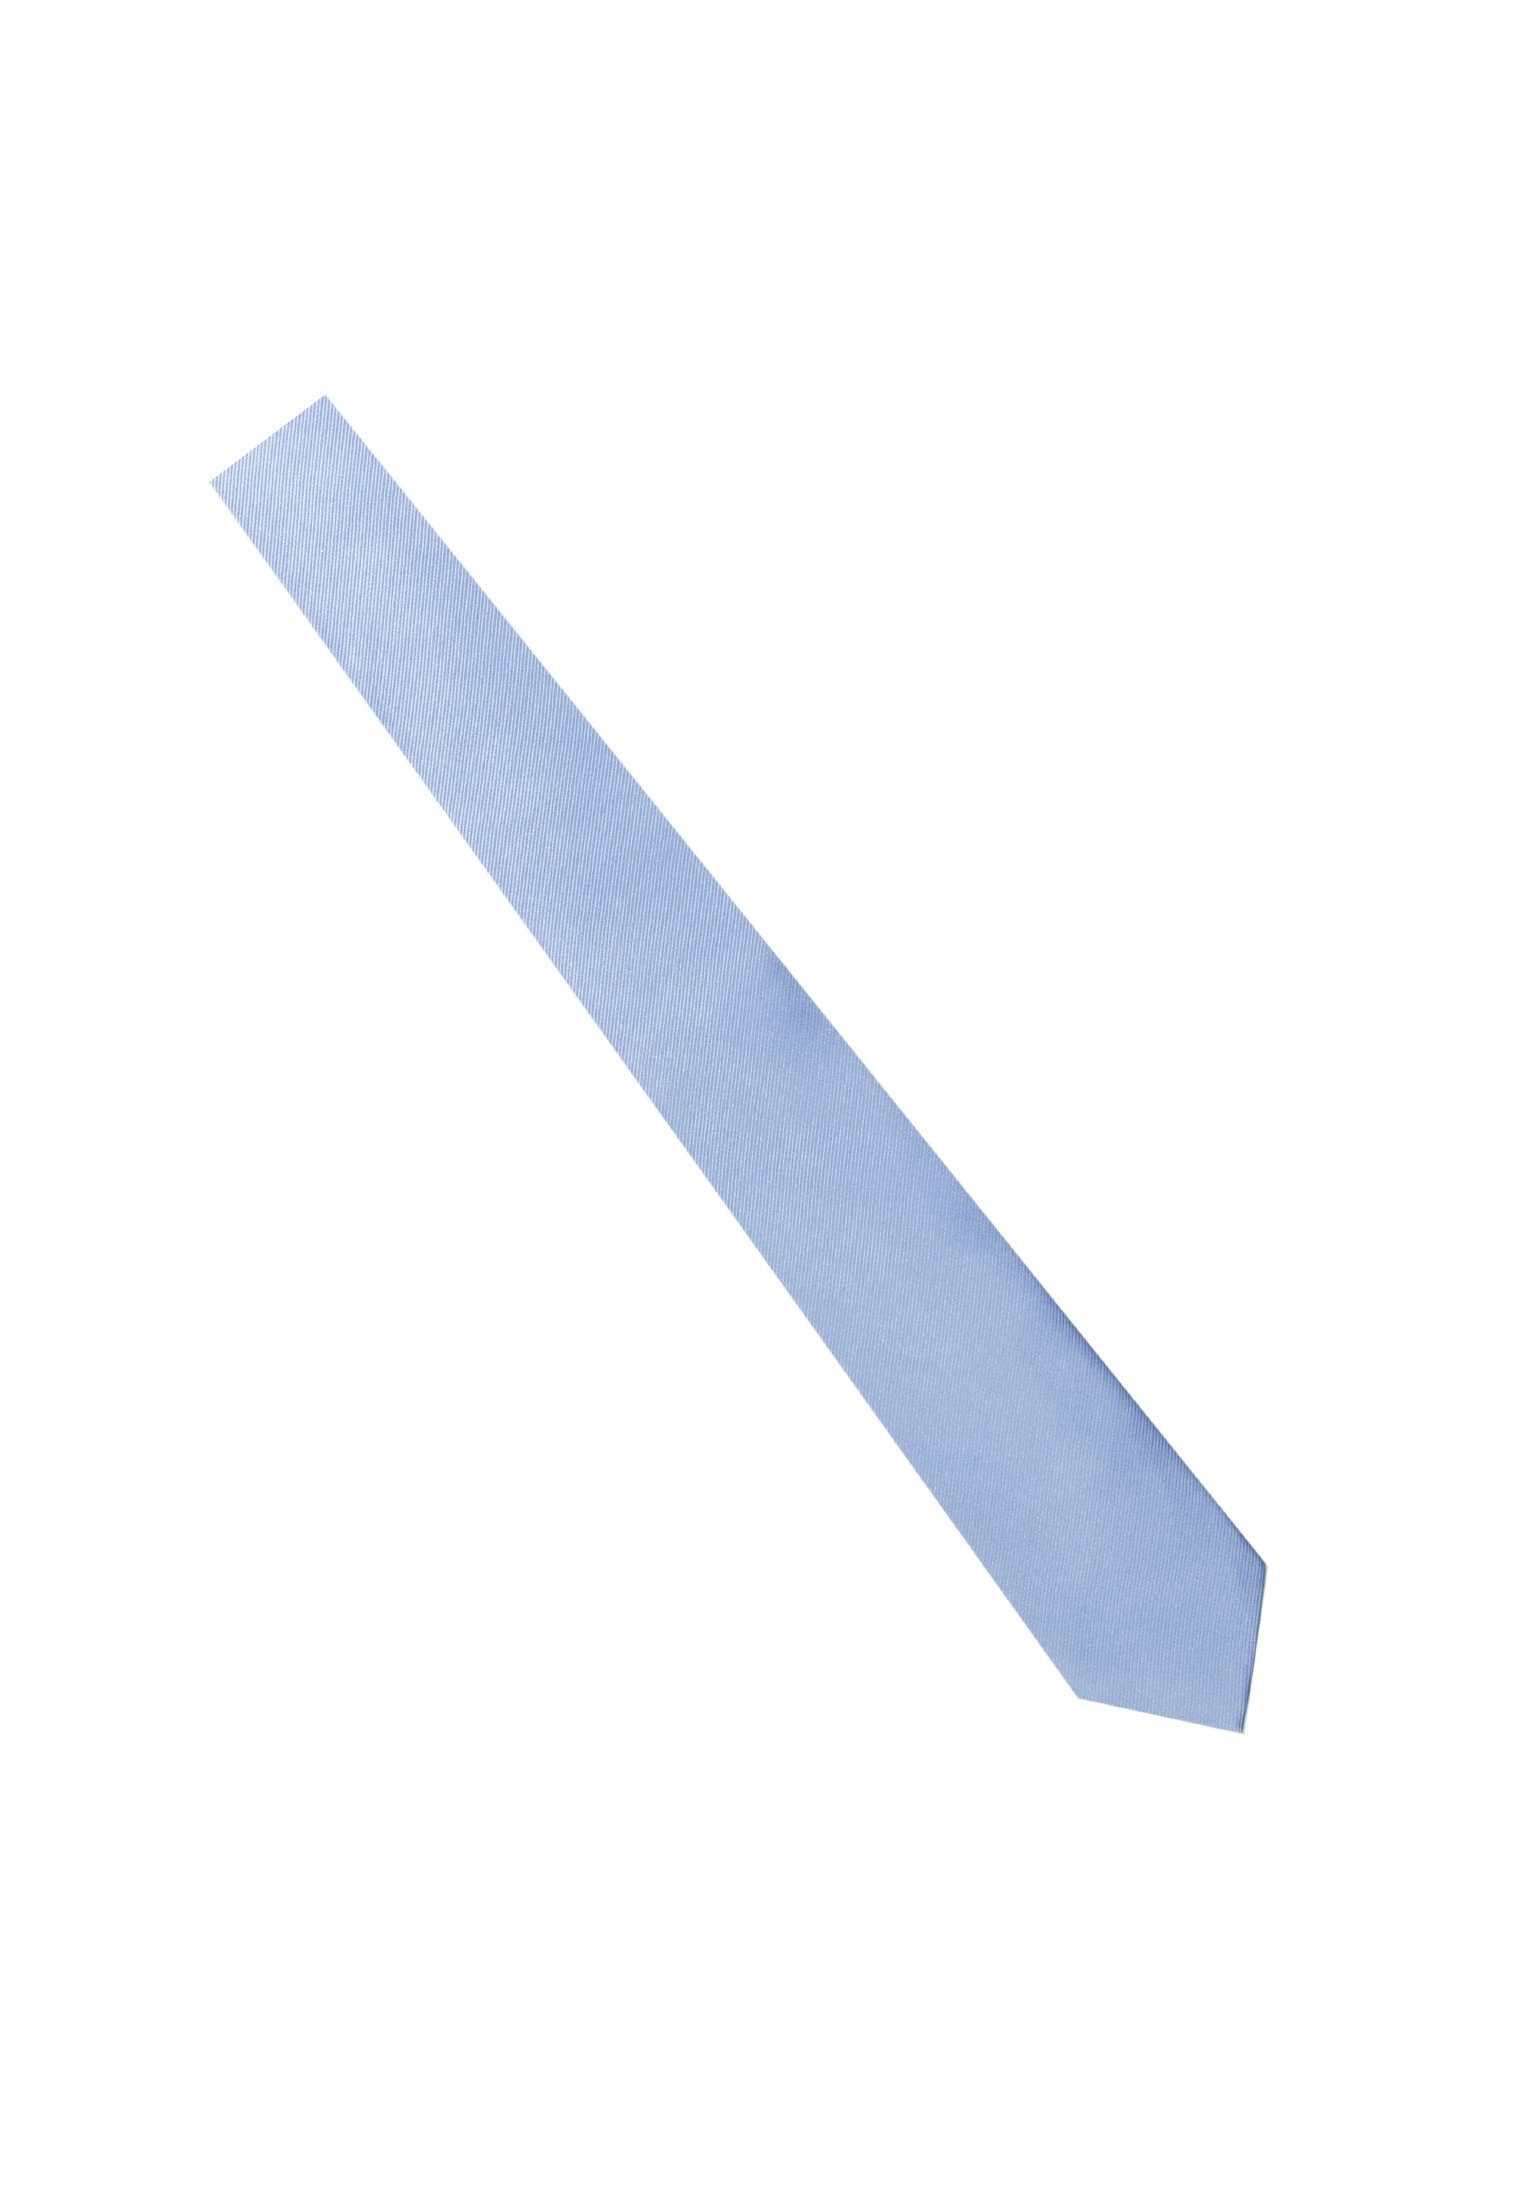 Krawatte Breit Uni Schwarze (7cm) Rose seidensticker Blau